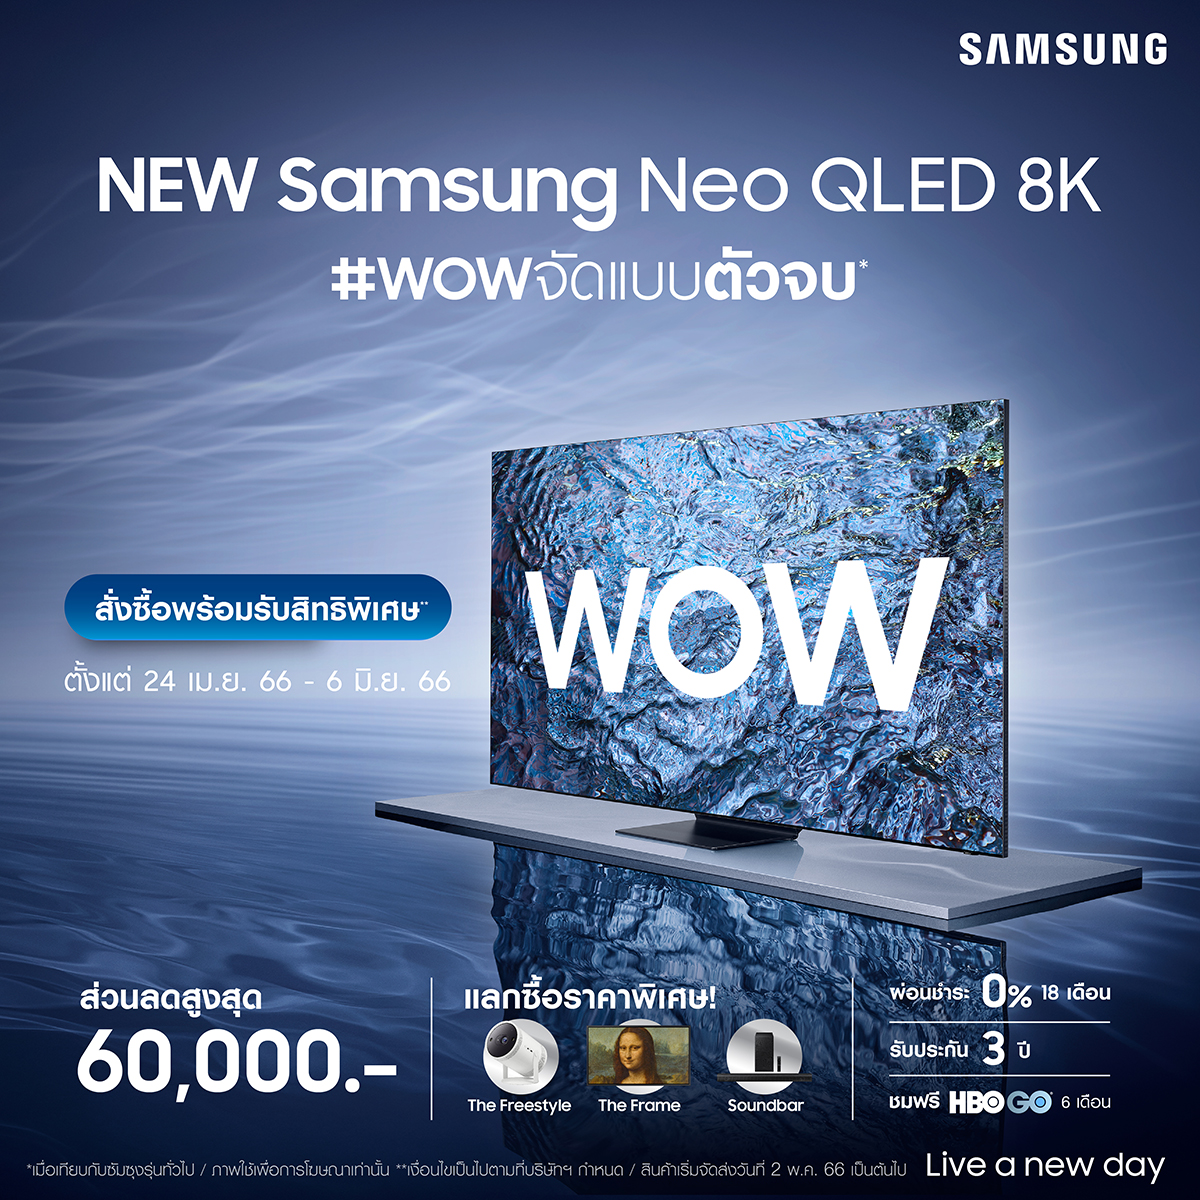 Samsung มอบโปรโมชั่นสุดพิเศษ New Samsung Neo QLED 8K